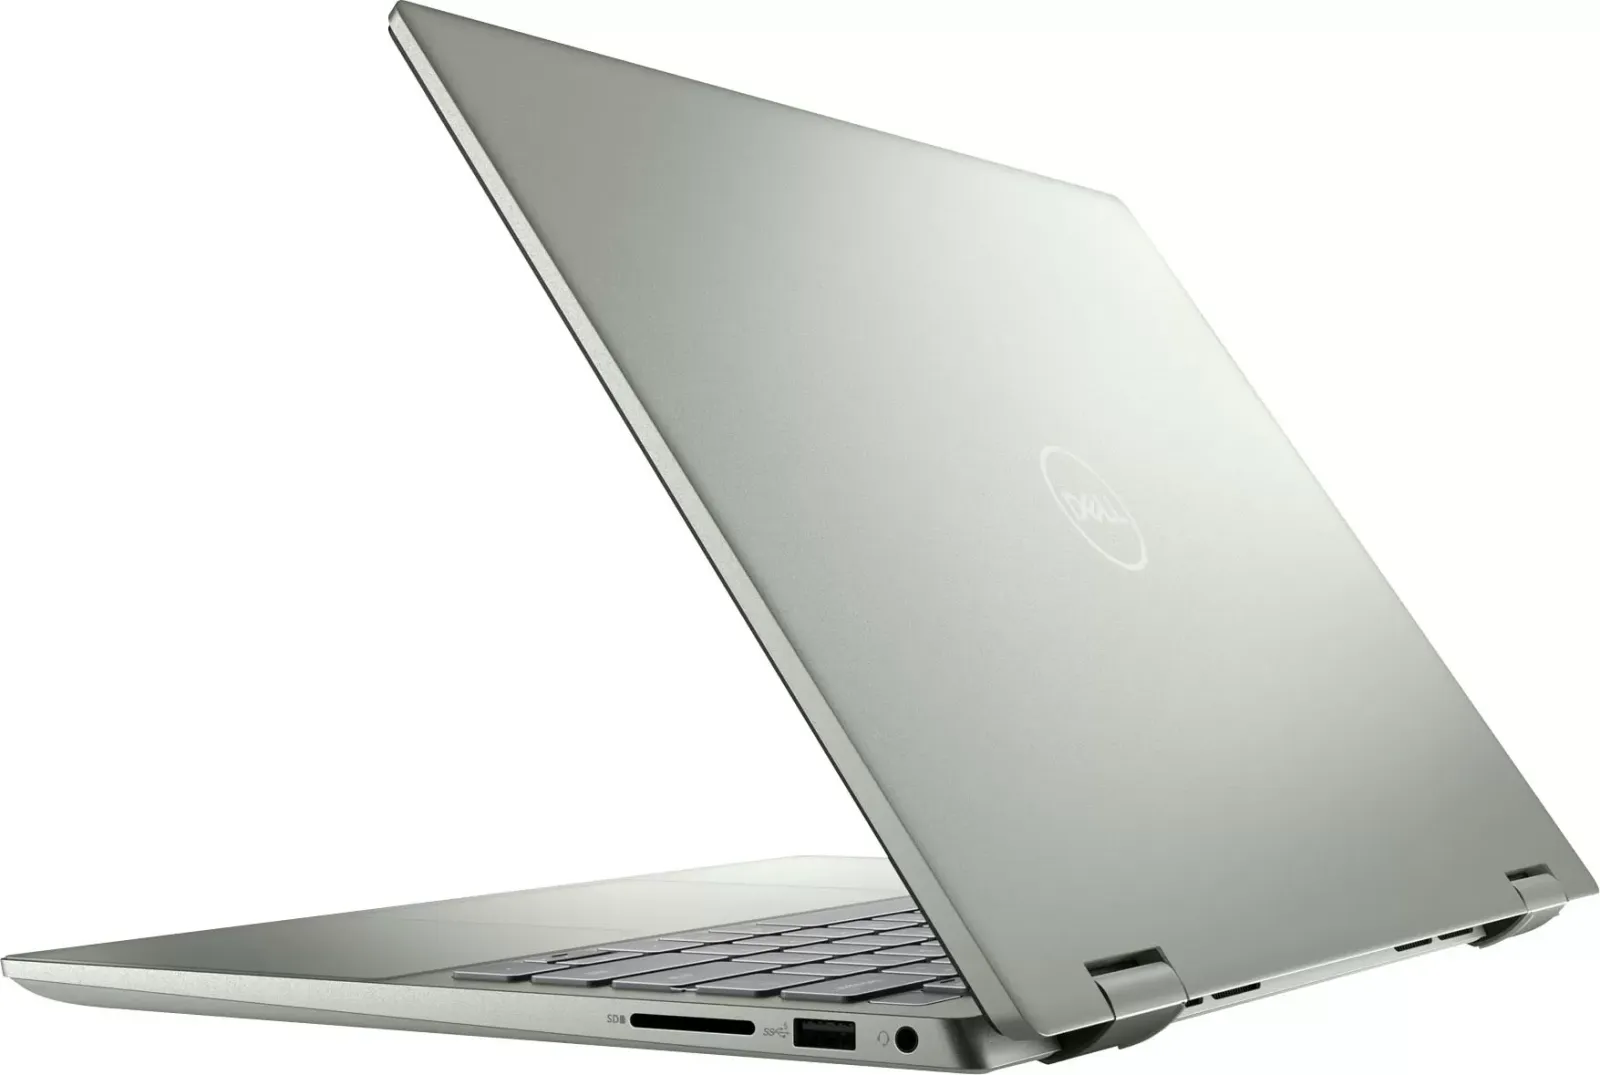 Ноутбук Dell Inspiron 7425 (I7425-A242PBL-PUS) CUSTOM недорого